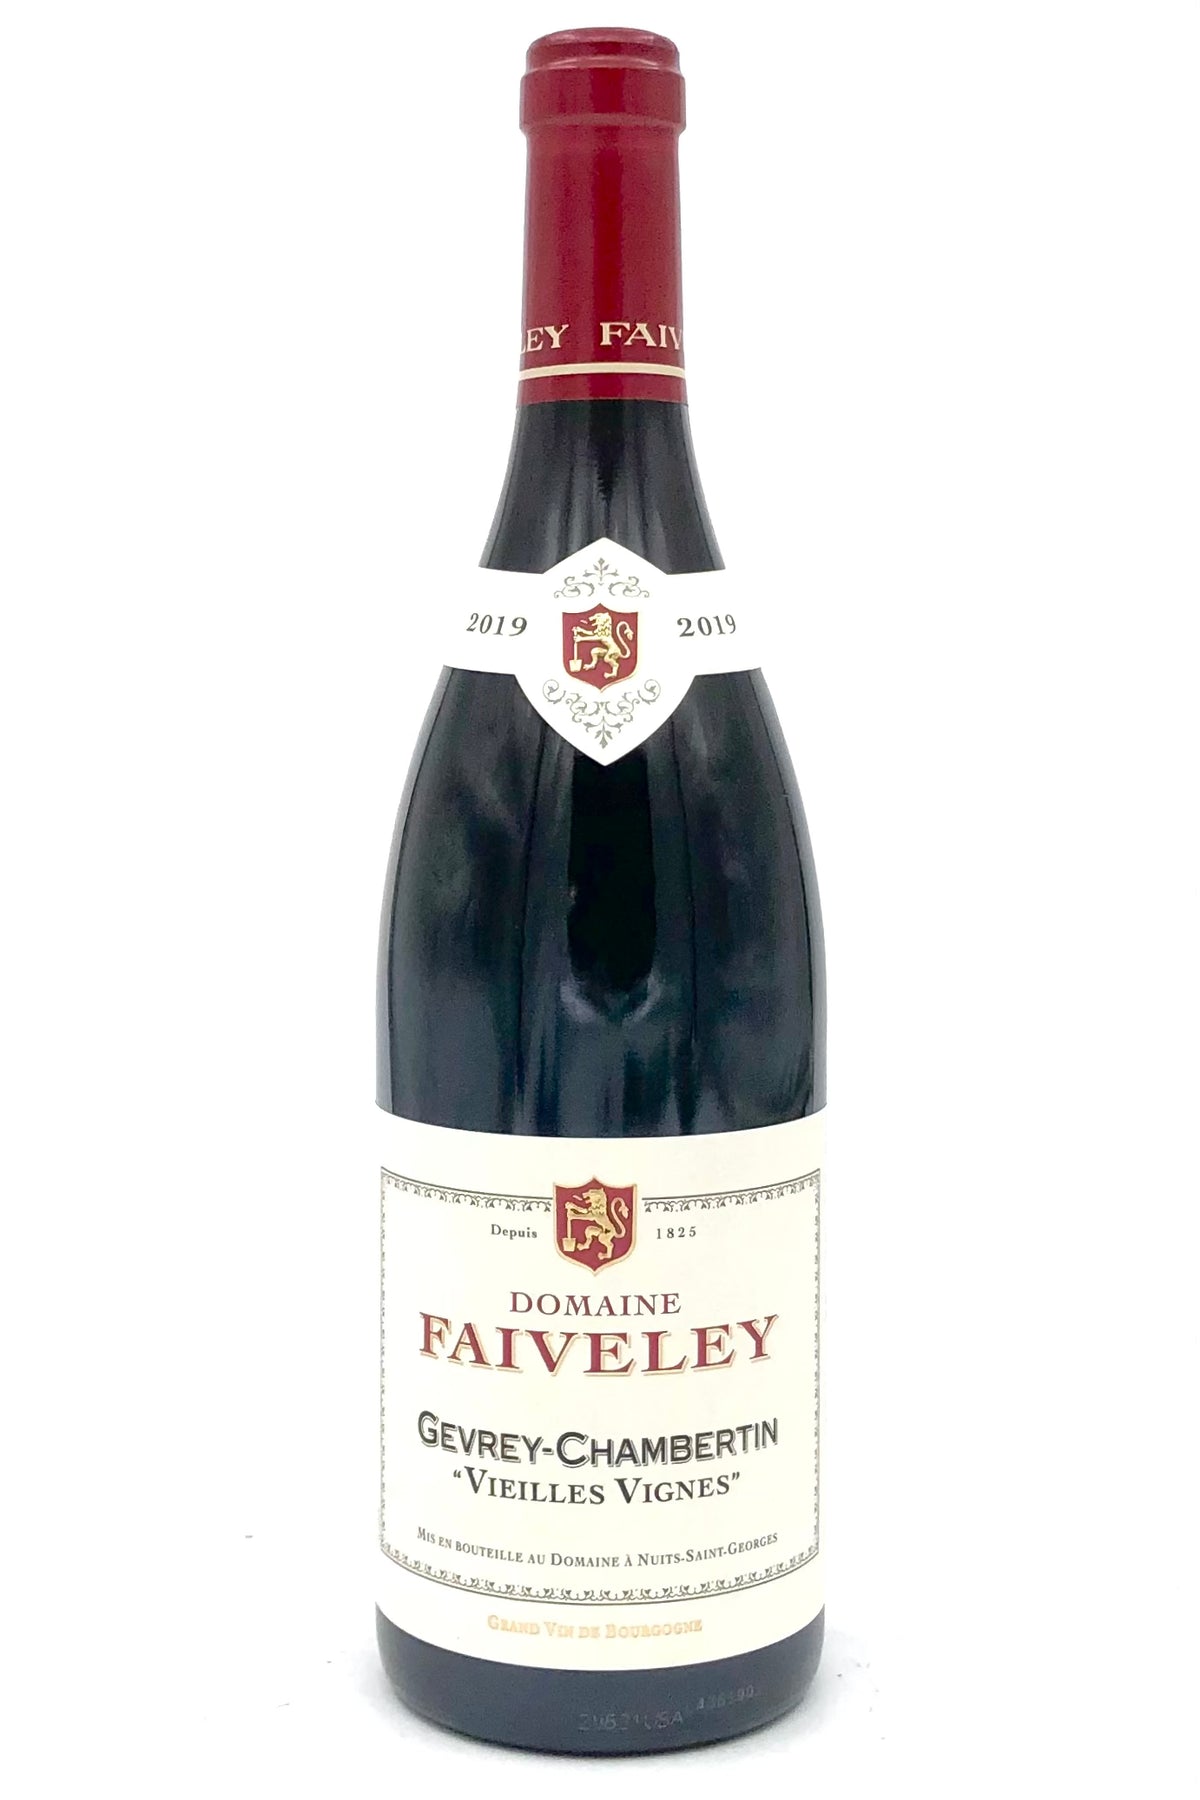 Domaine Faiveley 2019 Gevrey-Chambertin Vieilles Vignes